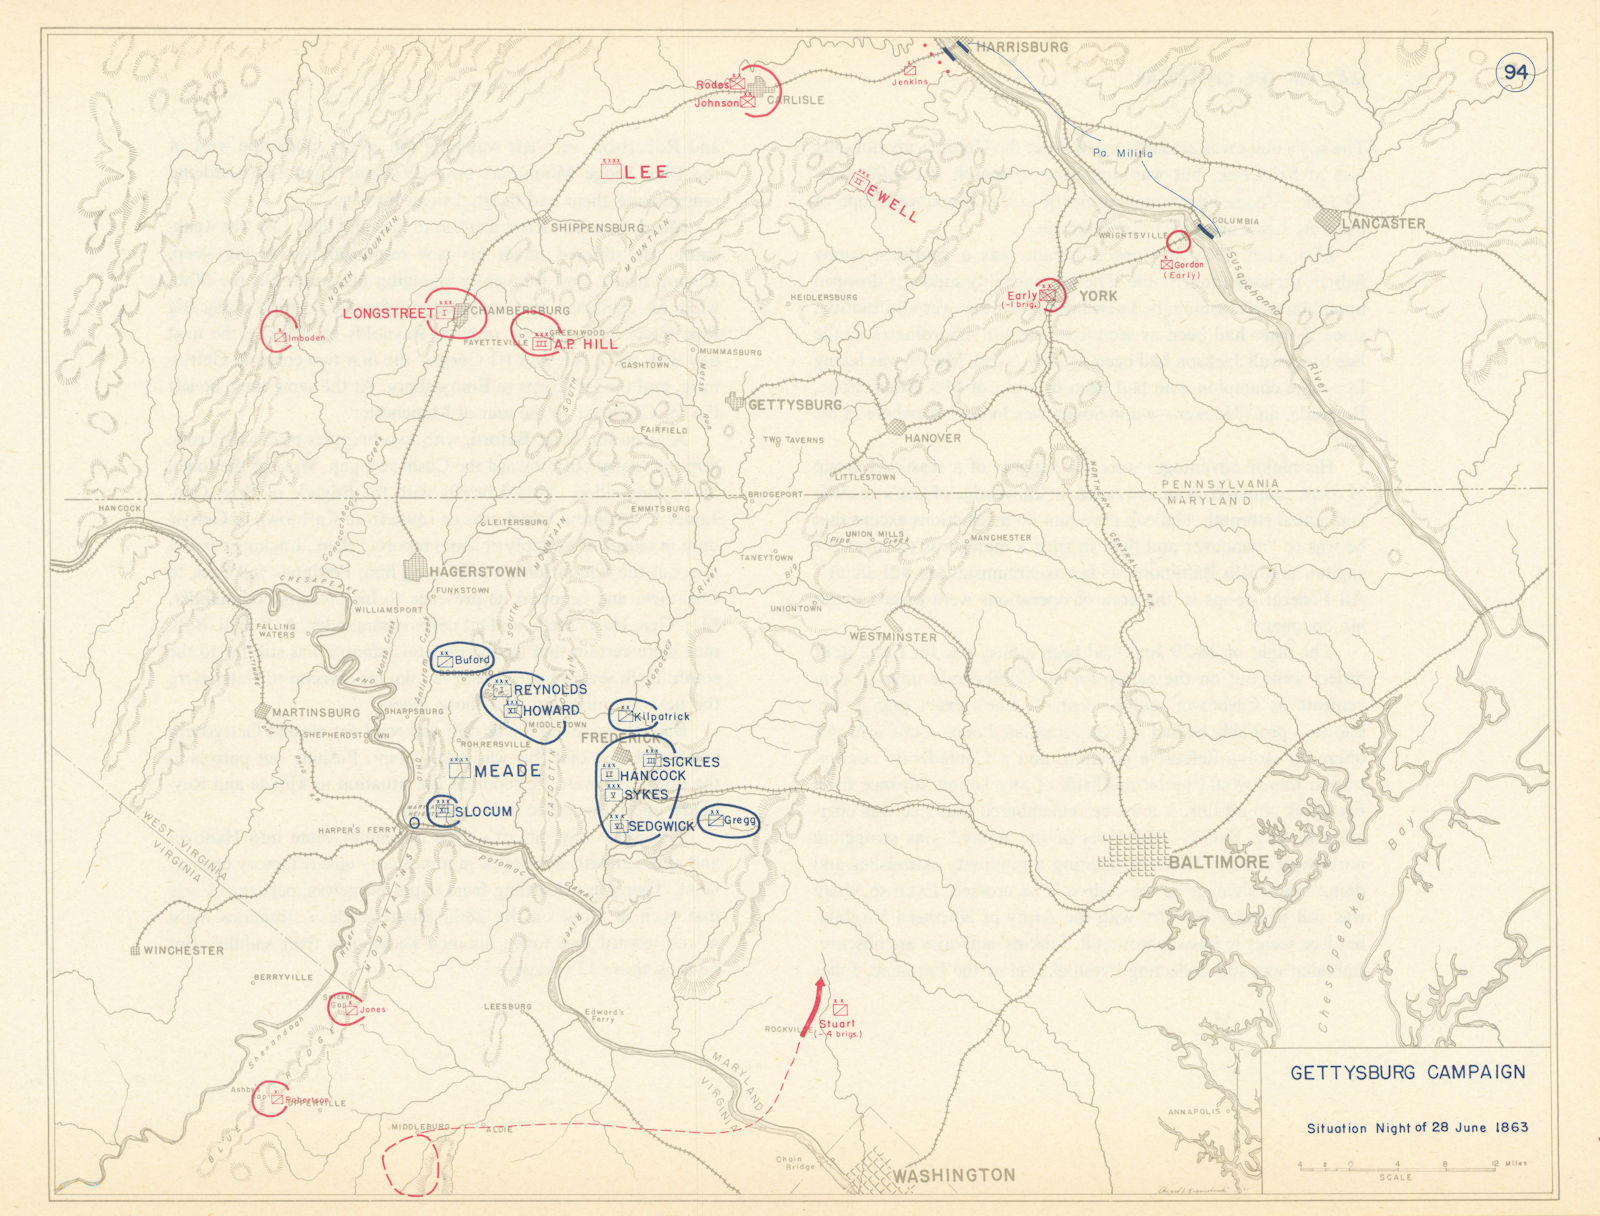 American Civil War. Situation Night of 28 June 1863 Gettysburg Campaign 1959 map